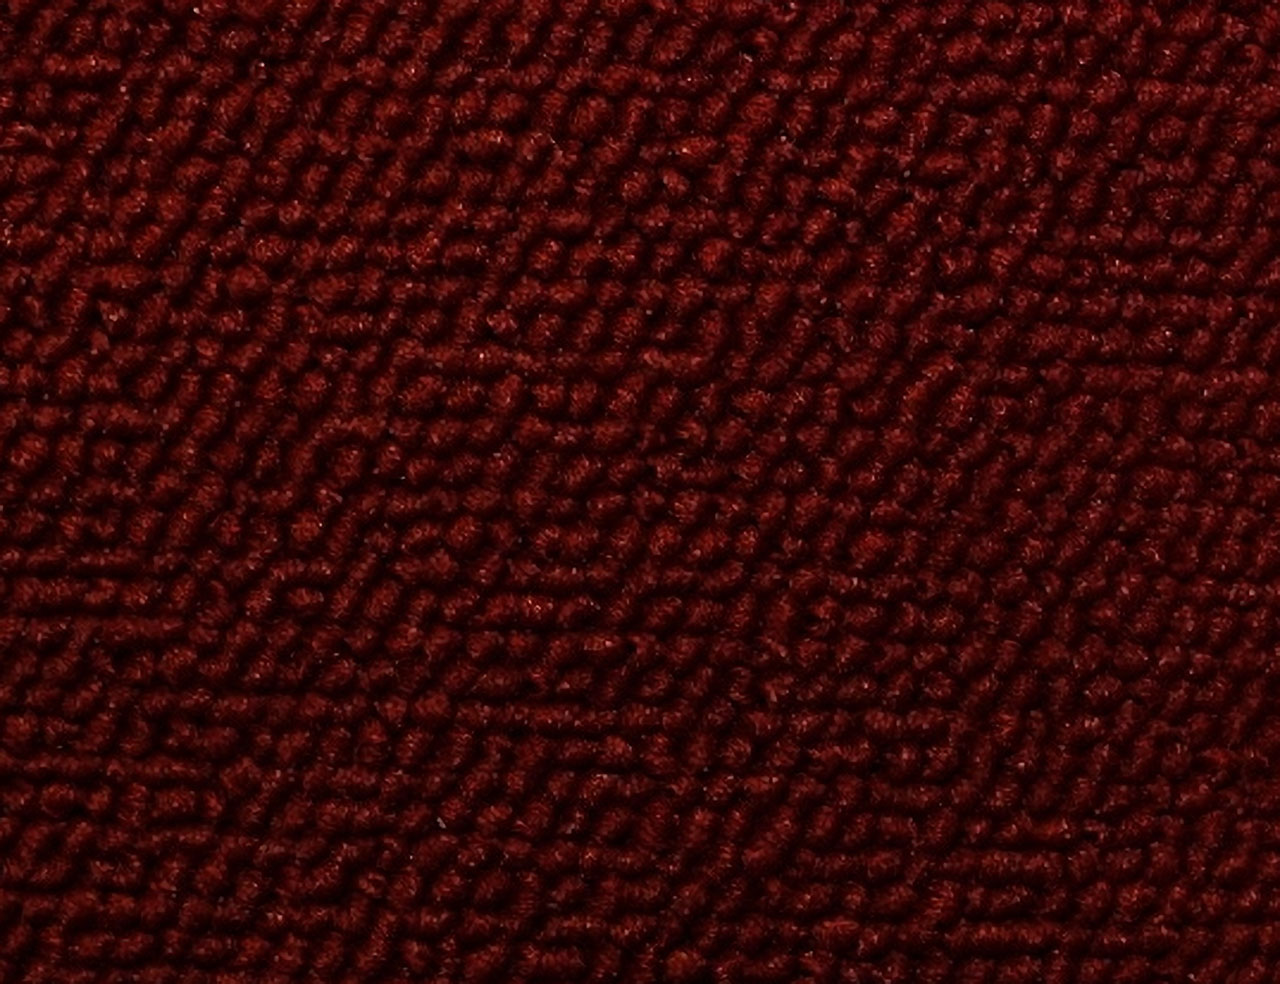 Holden Standard EH Standard Wagon C23 Bolero Red Carpet (Image 1 of 1)